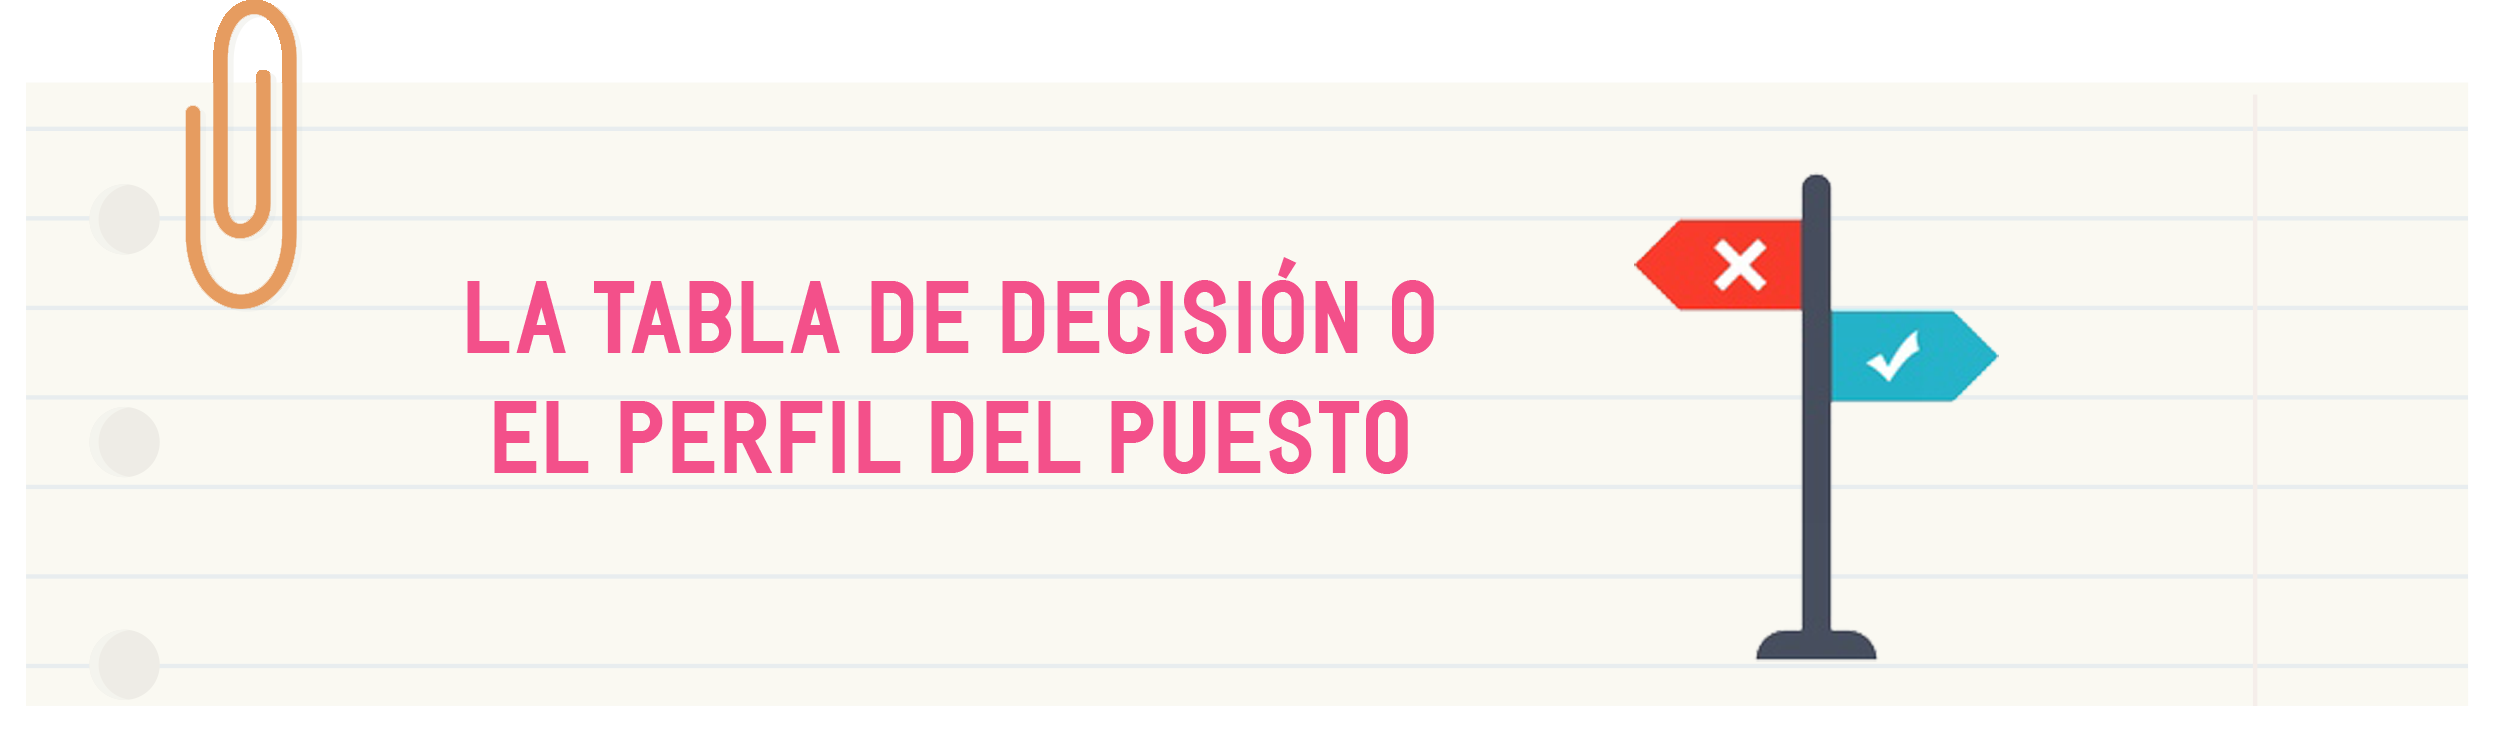 tabla_decision_perfil_puesto.png